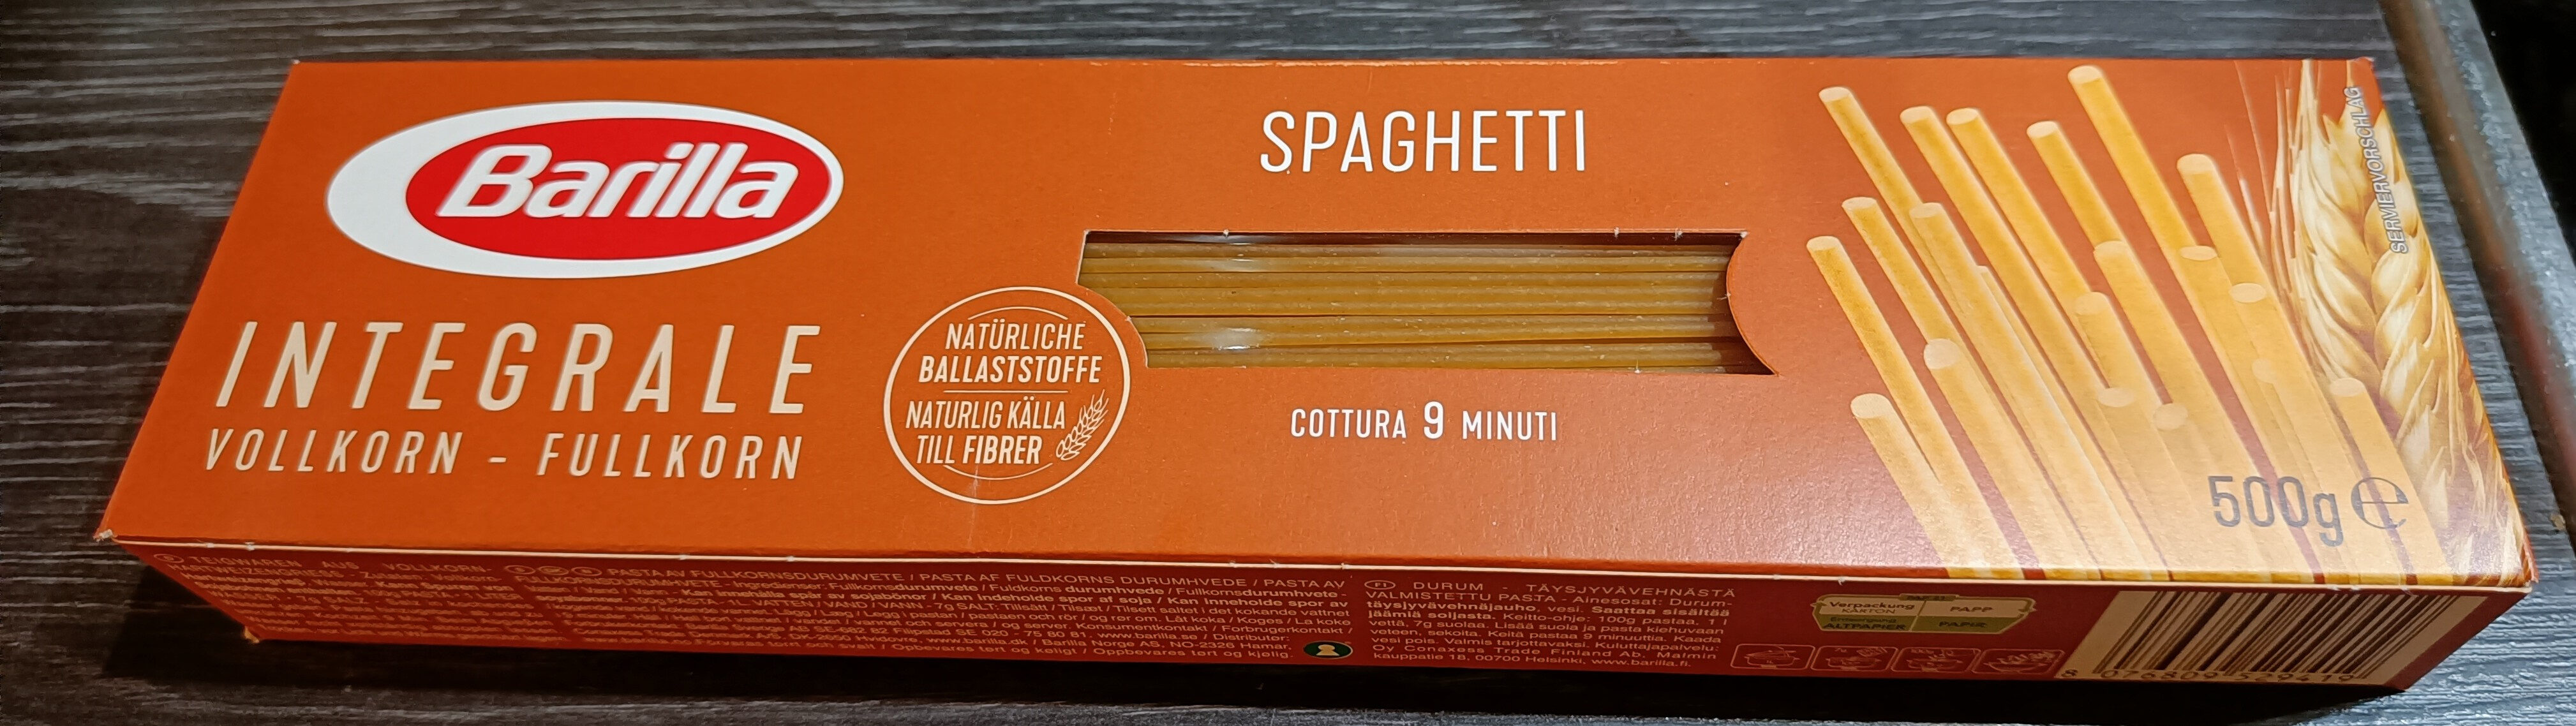 Spaghetti Integrale - Produkt